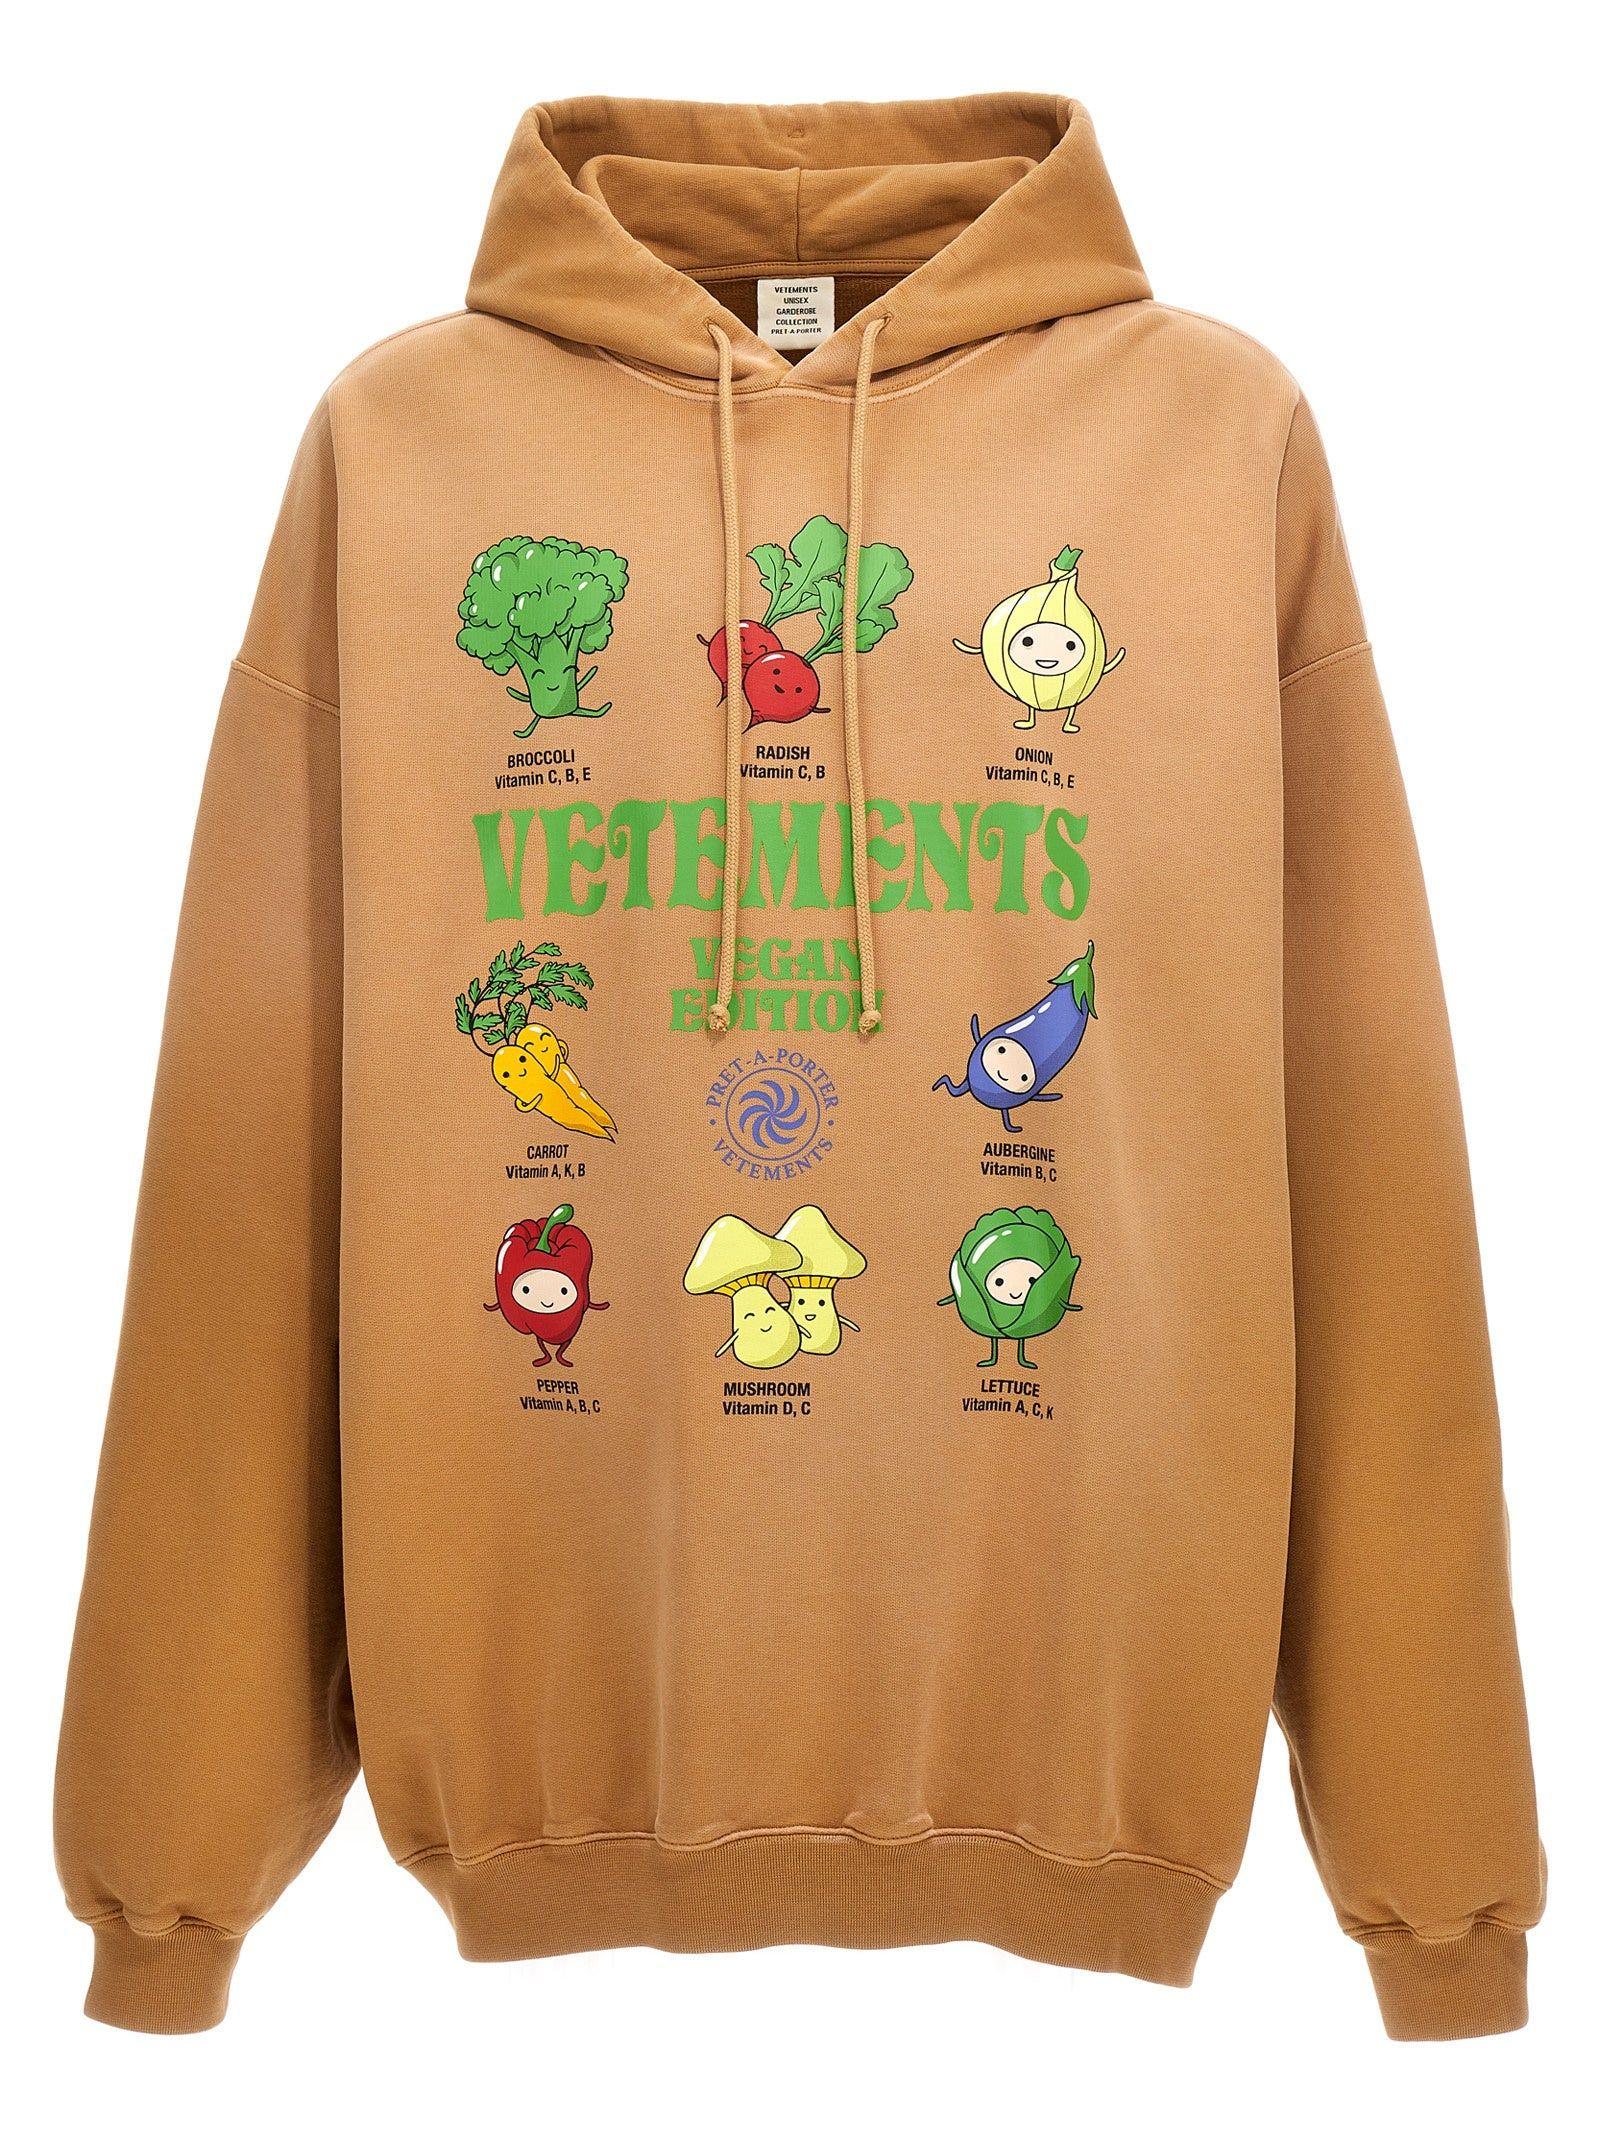 VETEMENTS vegan edition hoodie | nate-hospital.com